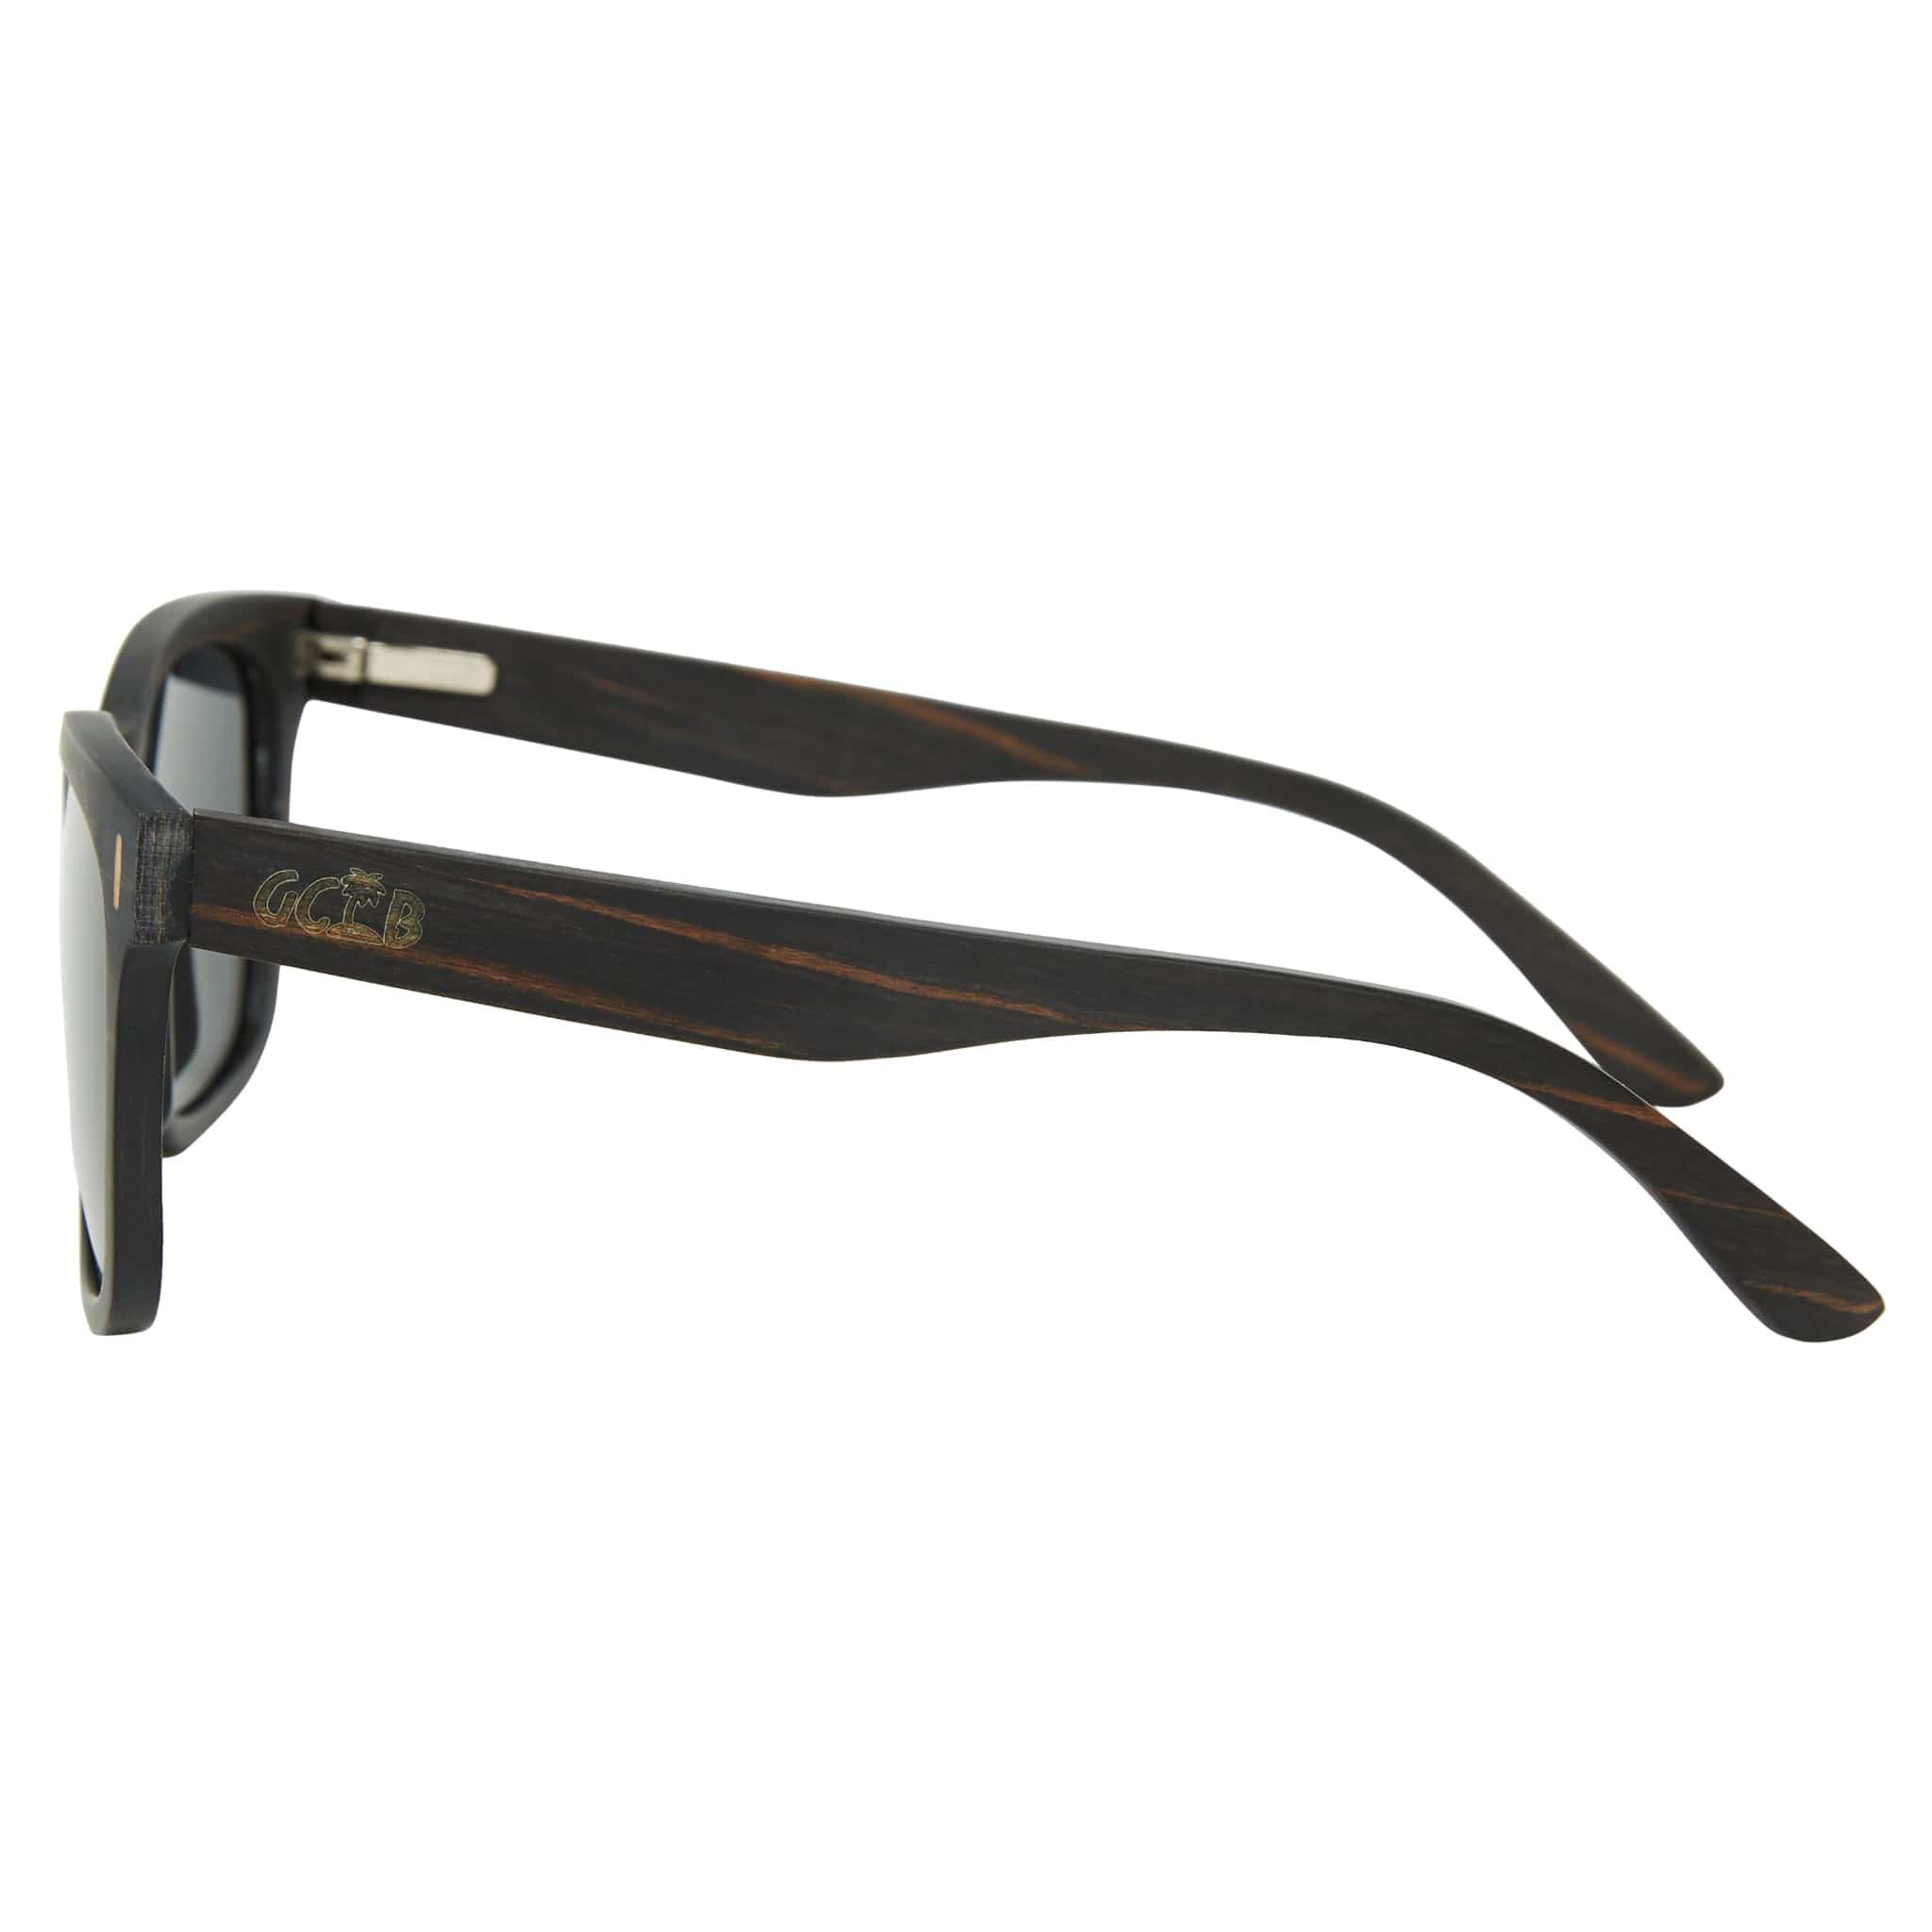 Gold Coast Longboards Sunglasses Medium - 141mm Miami - Ebony